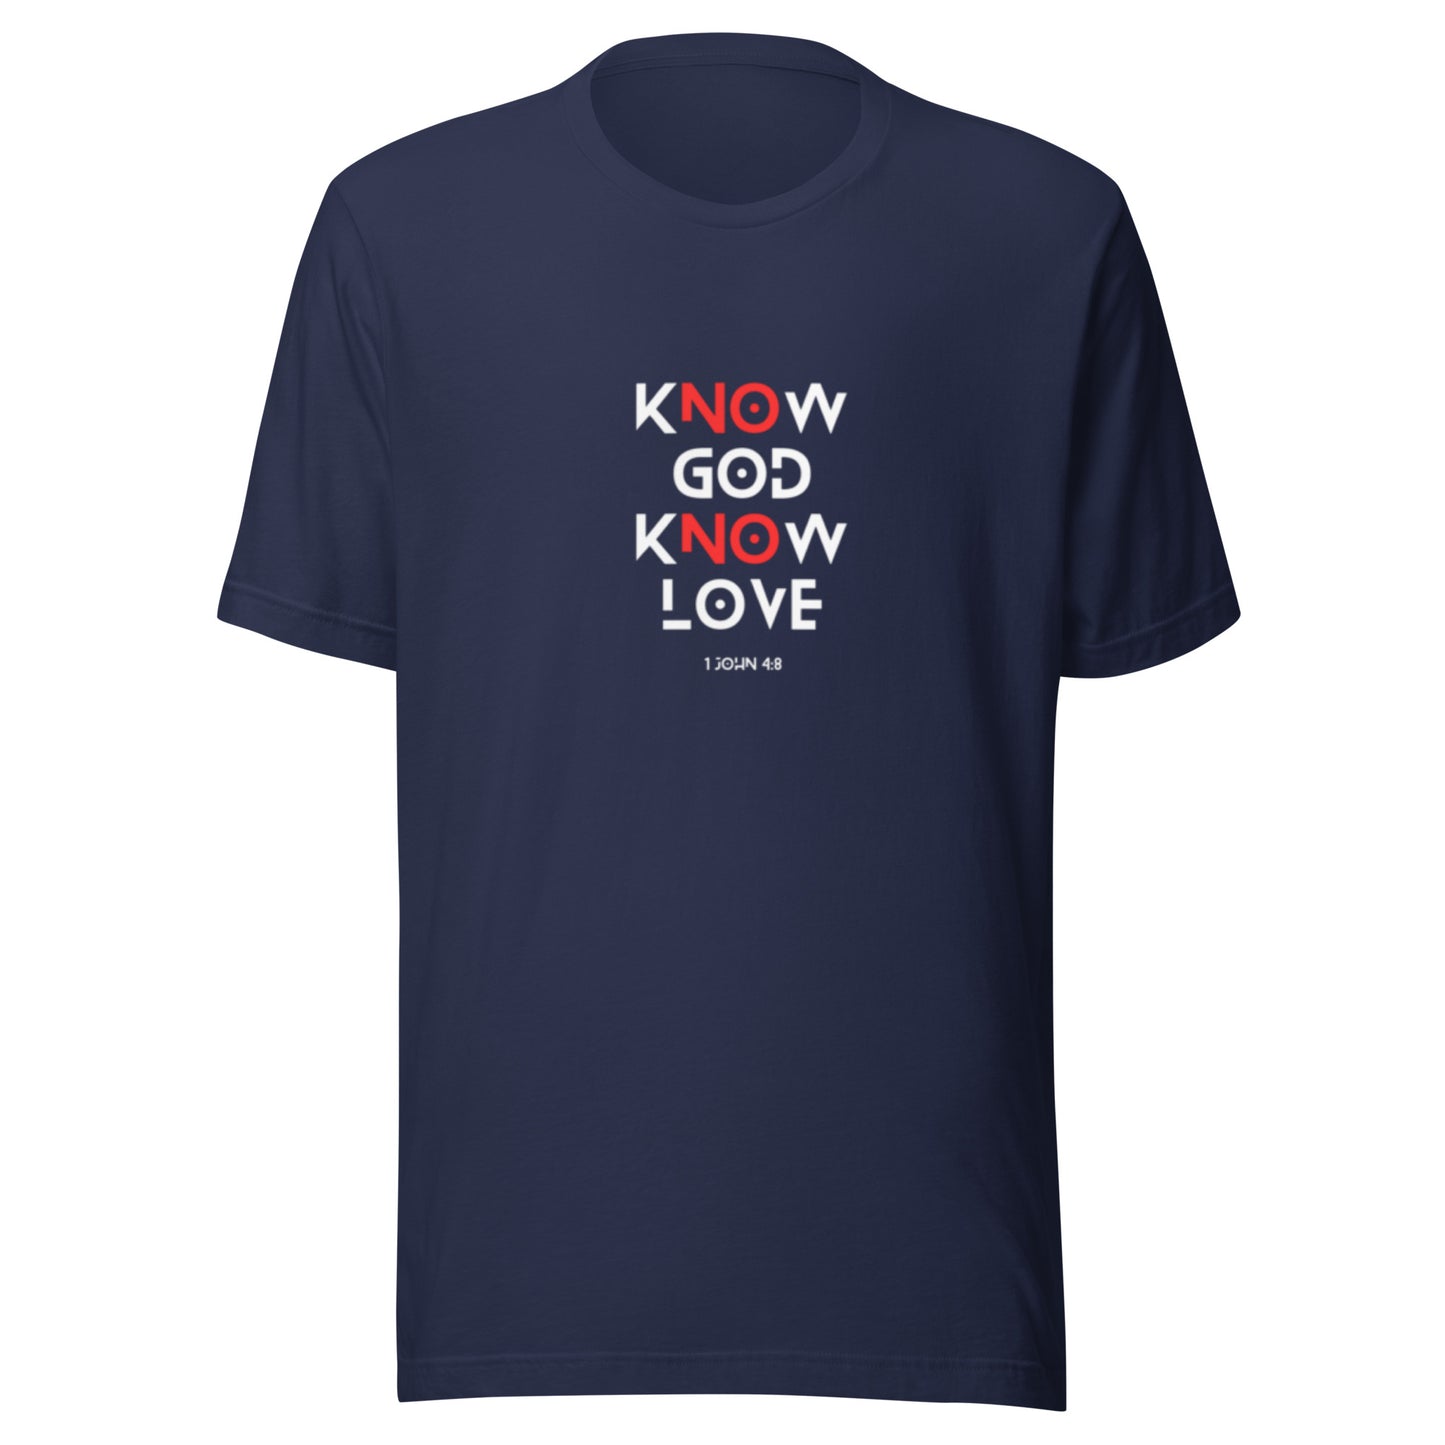 God is Love T-shirt